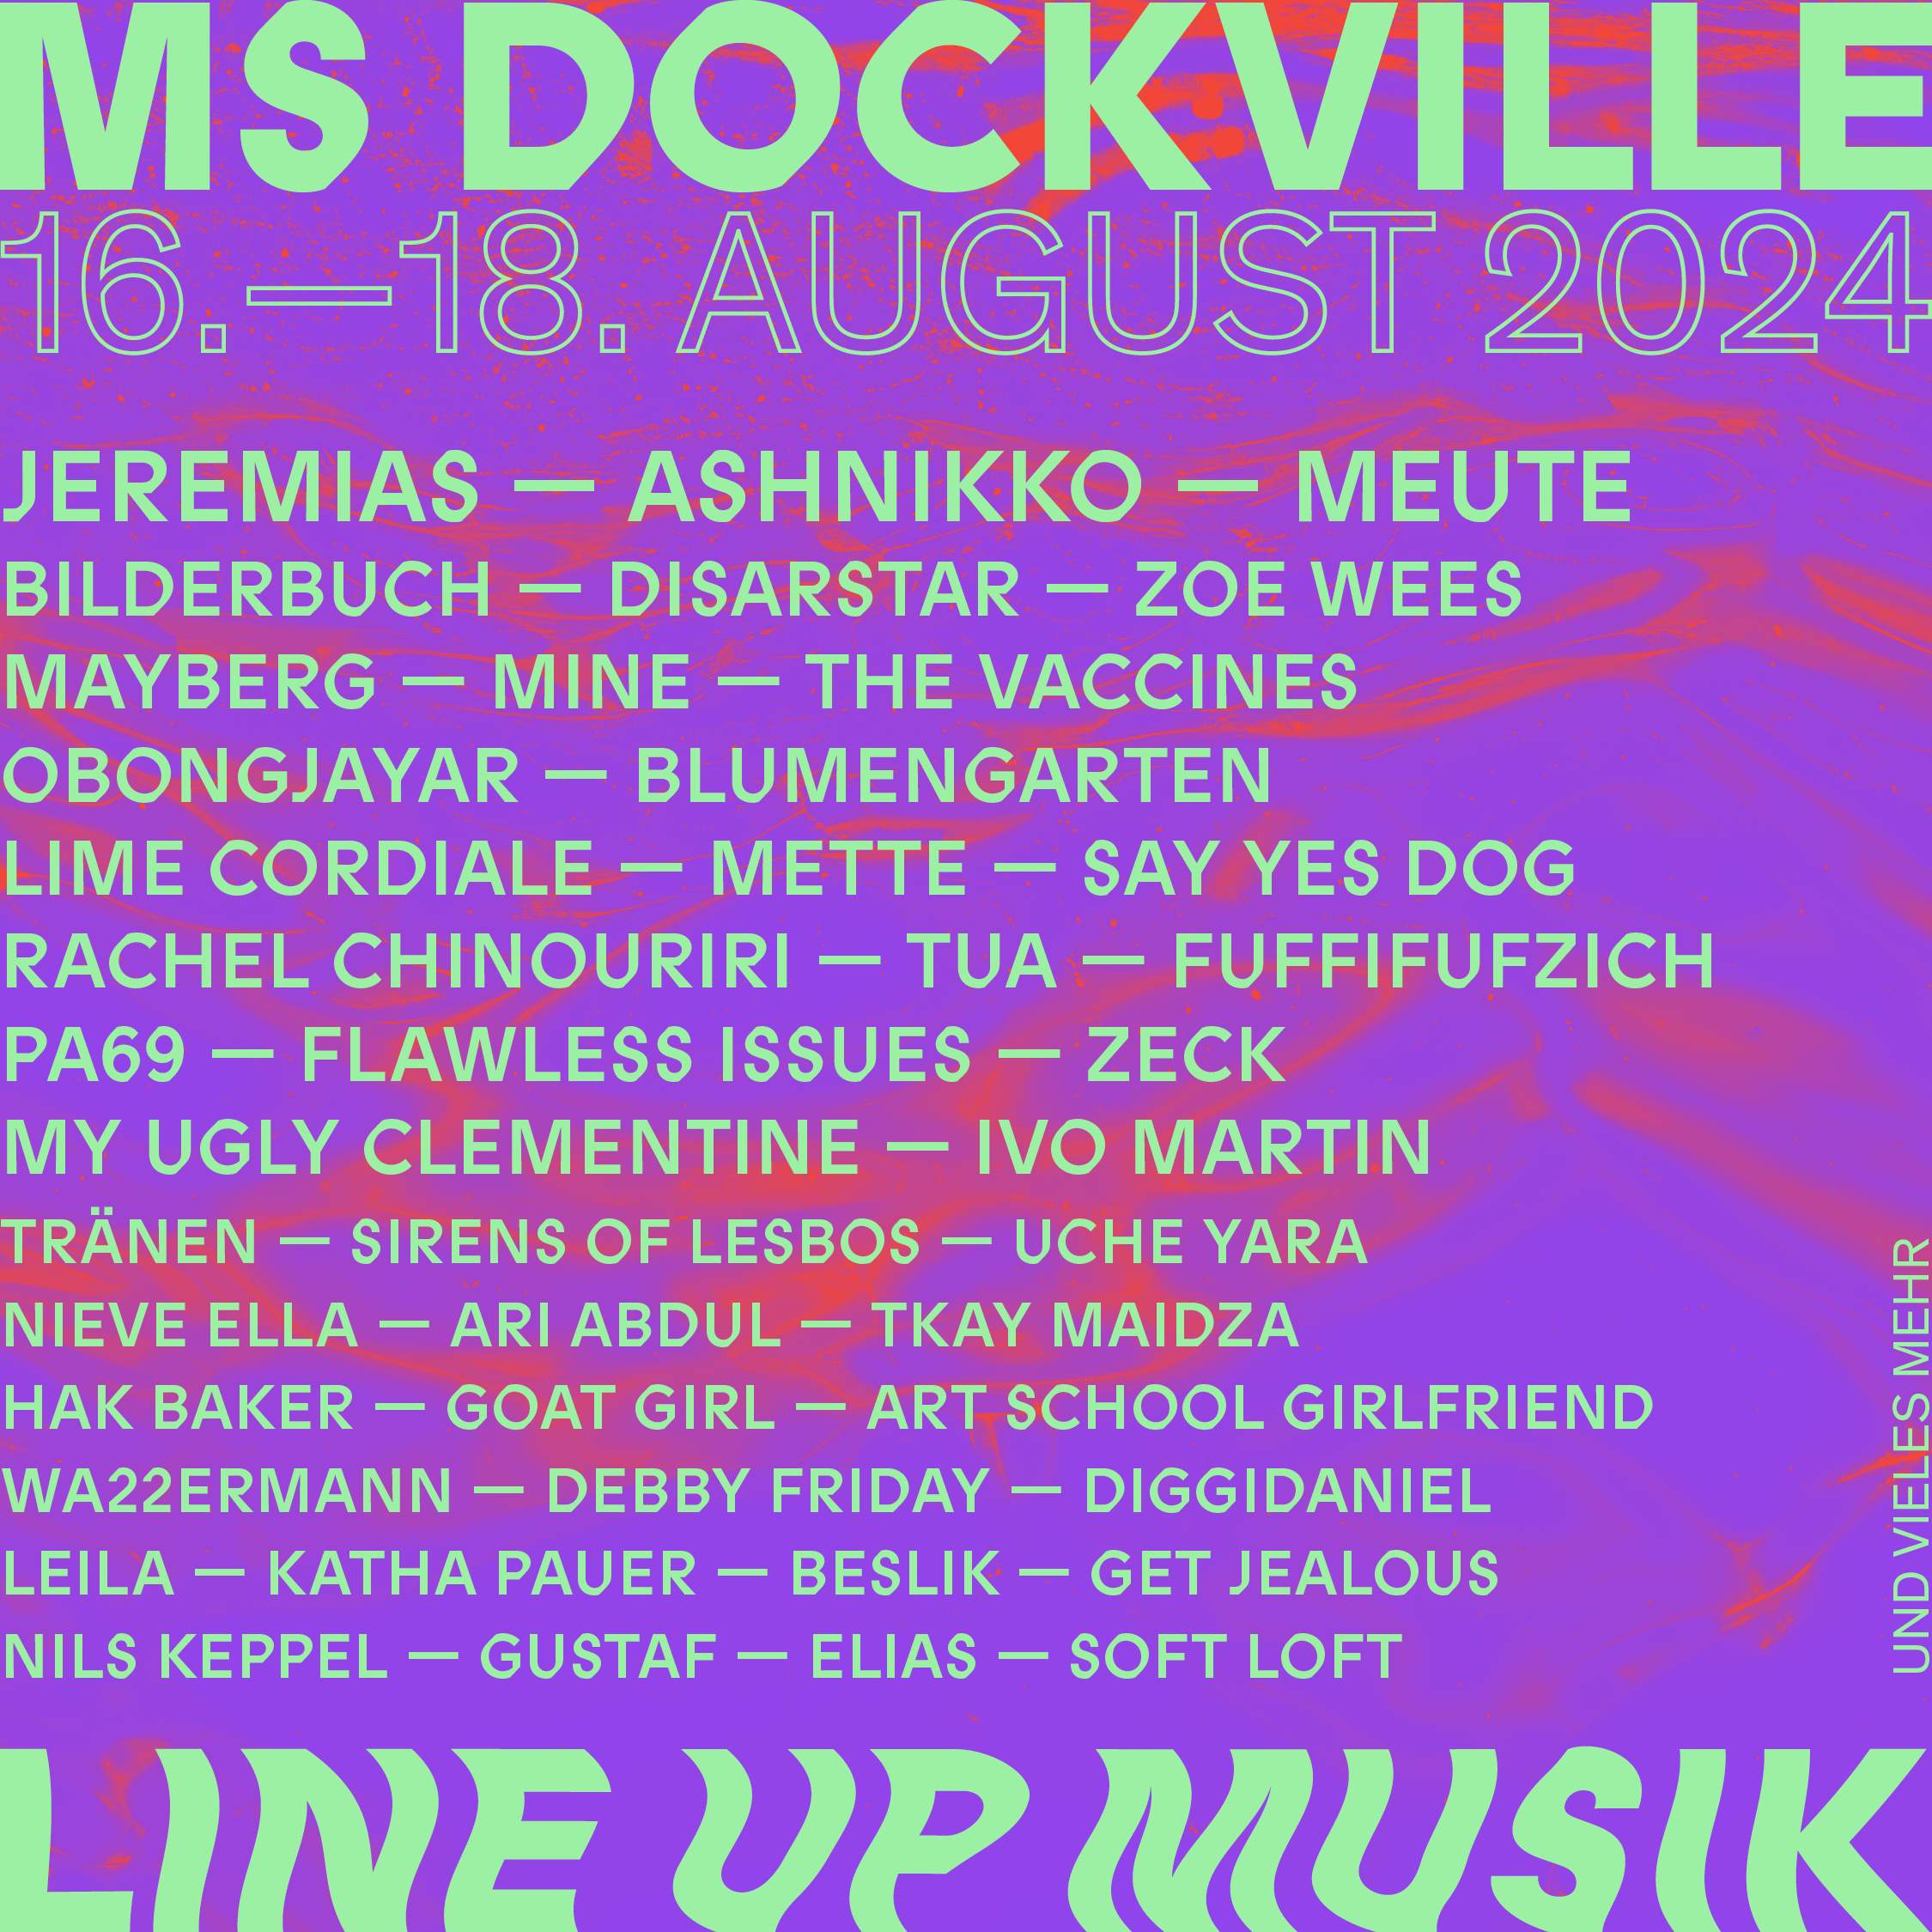 MS Dockville 2024 - フライヤー表